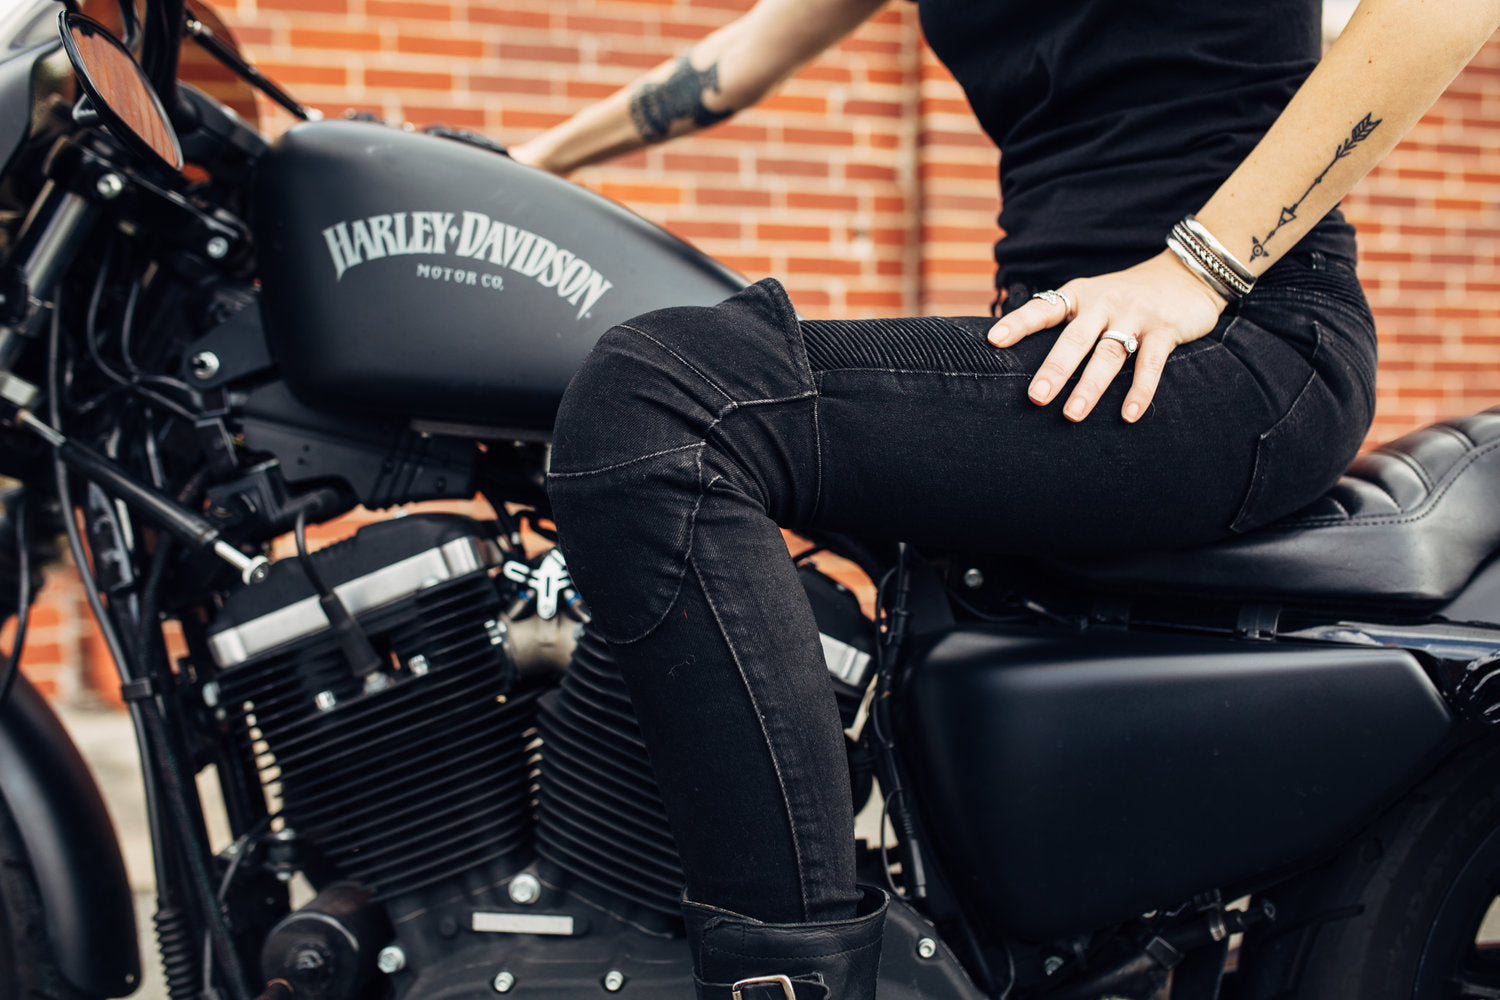 Harley Davidson uglyBROS Twiggy